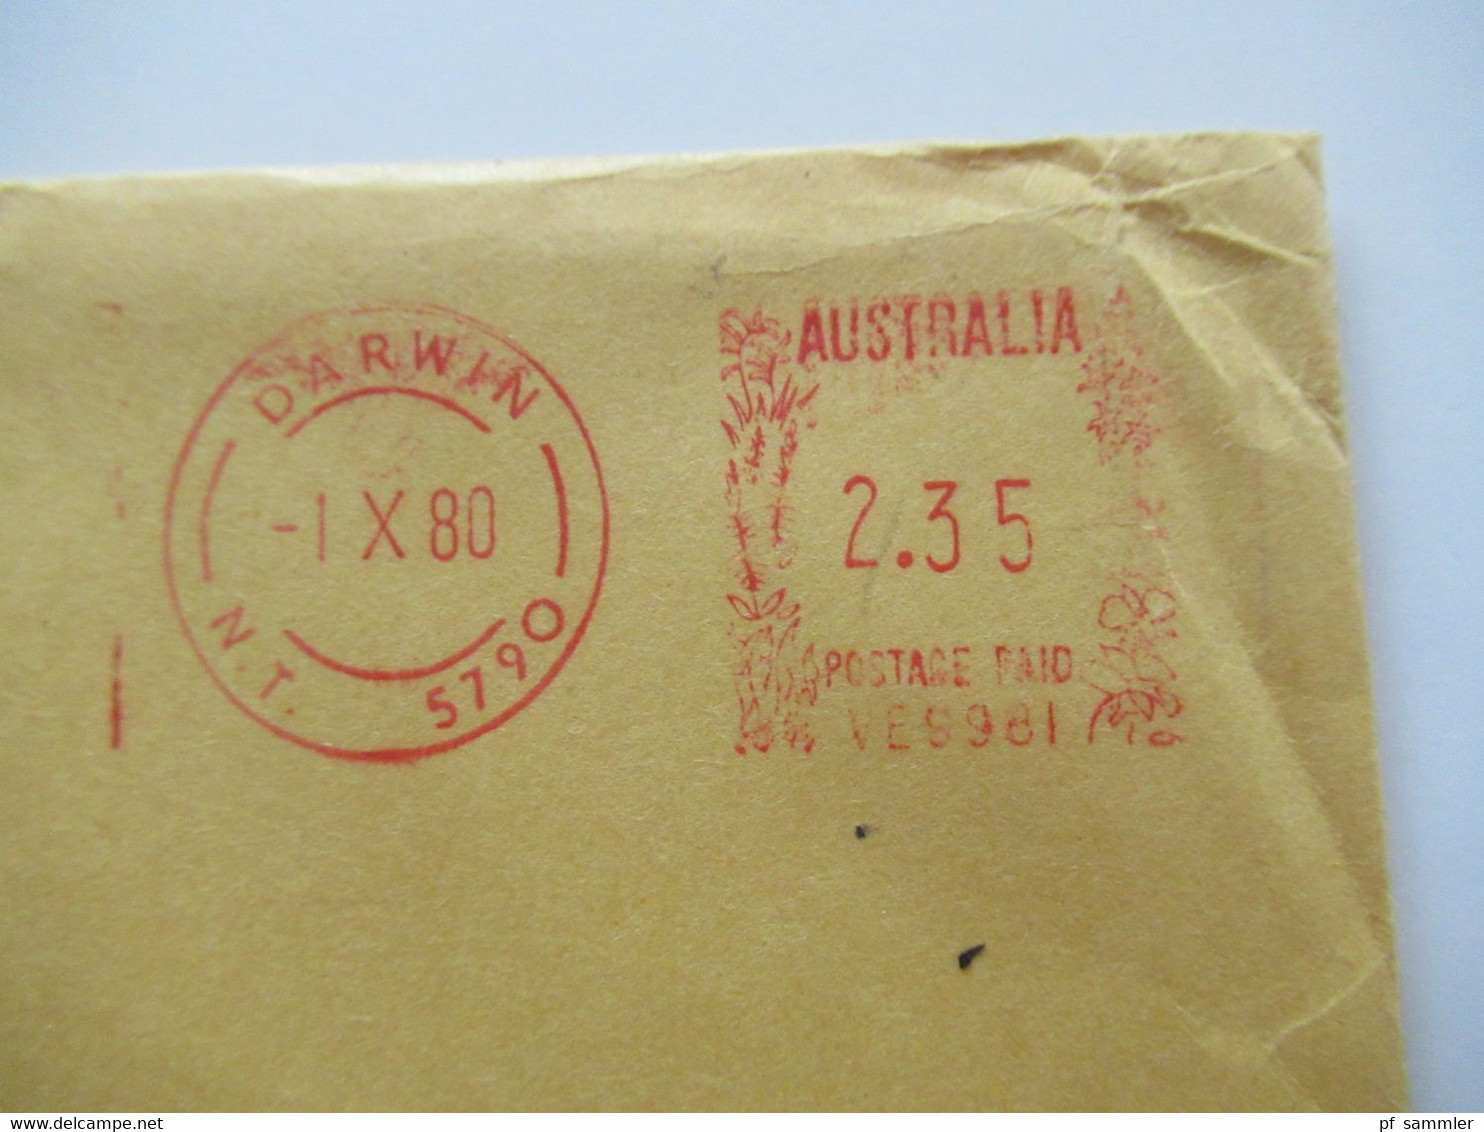 Australien 1980 Freistempel Darwin N.T. 5790 Postage Paid Air Mail Nach Atlanta USA Umschlag The Legislative Assembly - Lettres & Documents